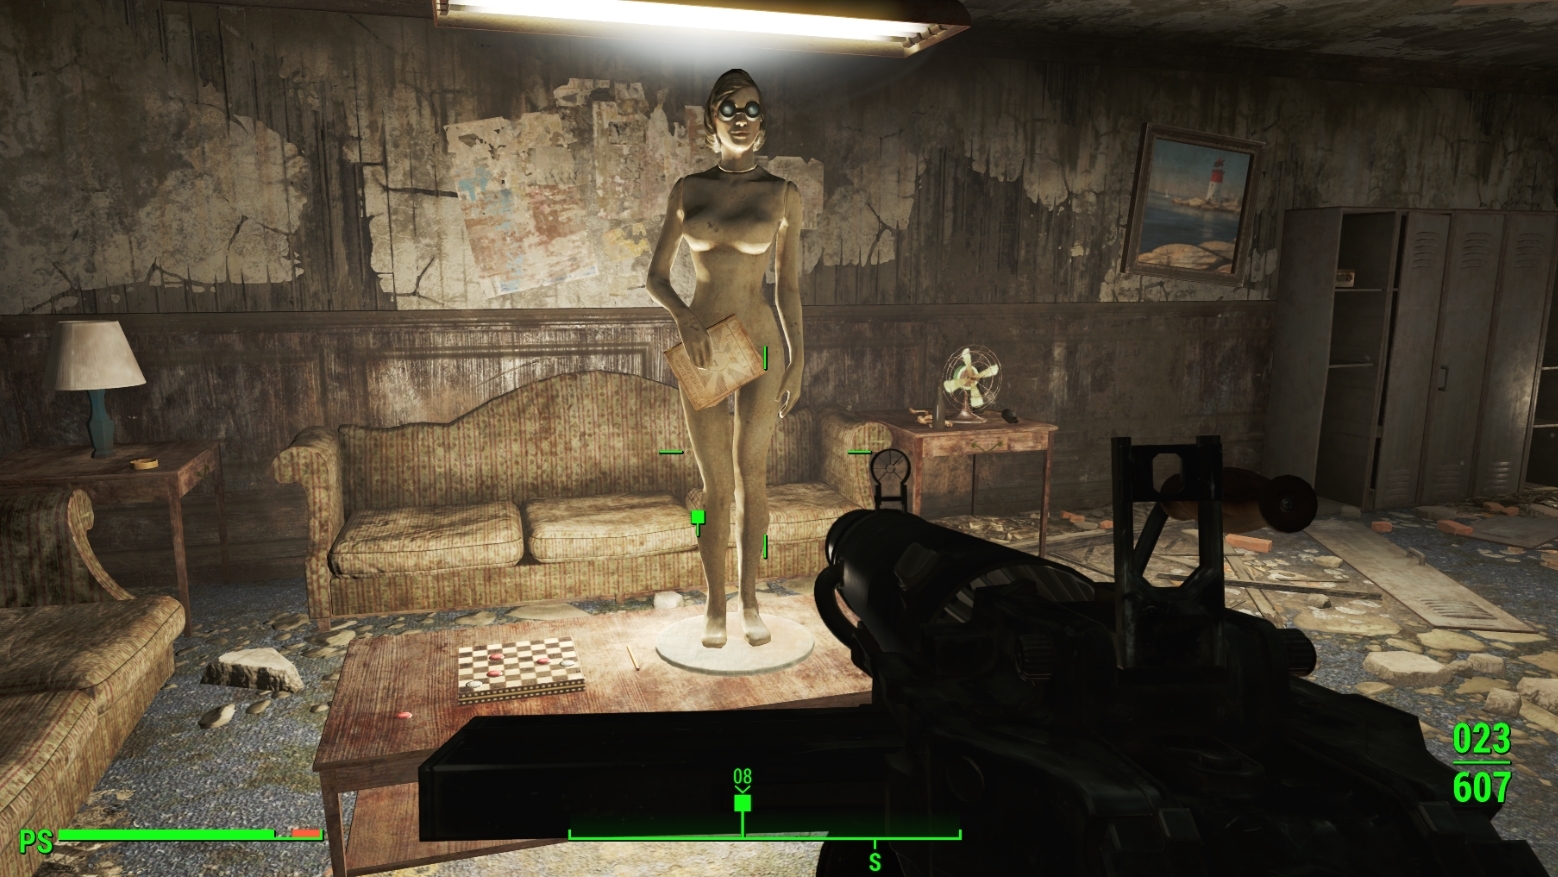 Fallout -||- son radiaciones sanas